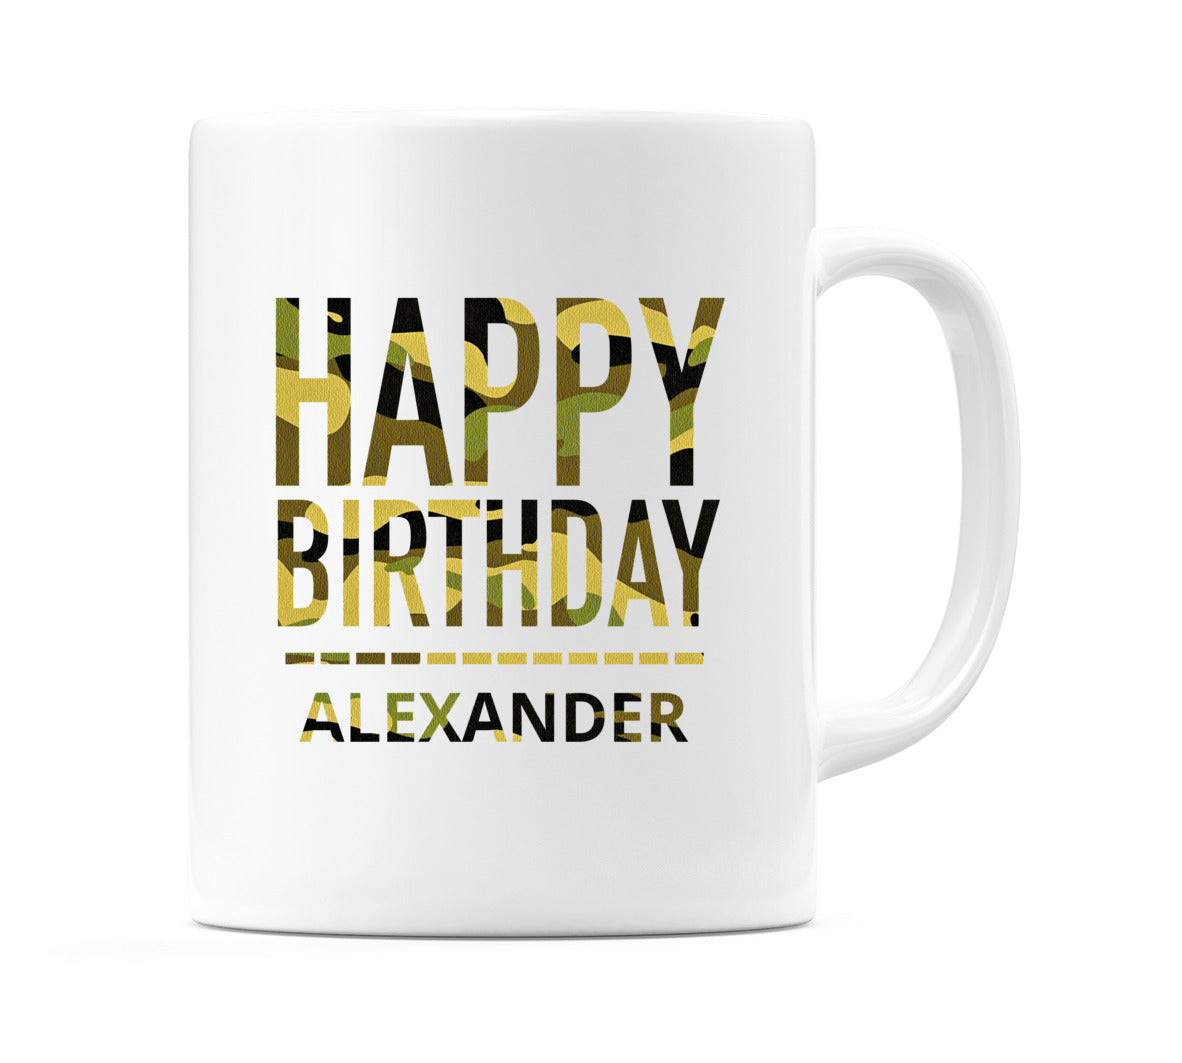 Happy Birthday Alexander (Camo) Mug Cup by WeDoMugs